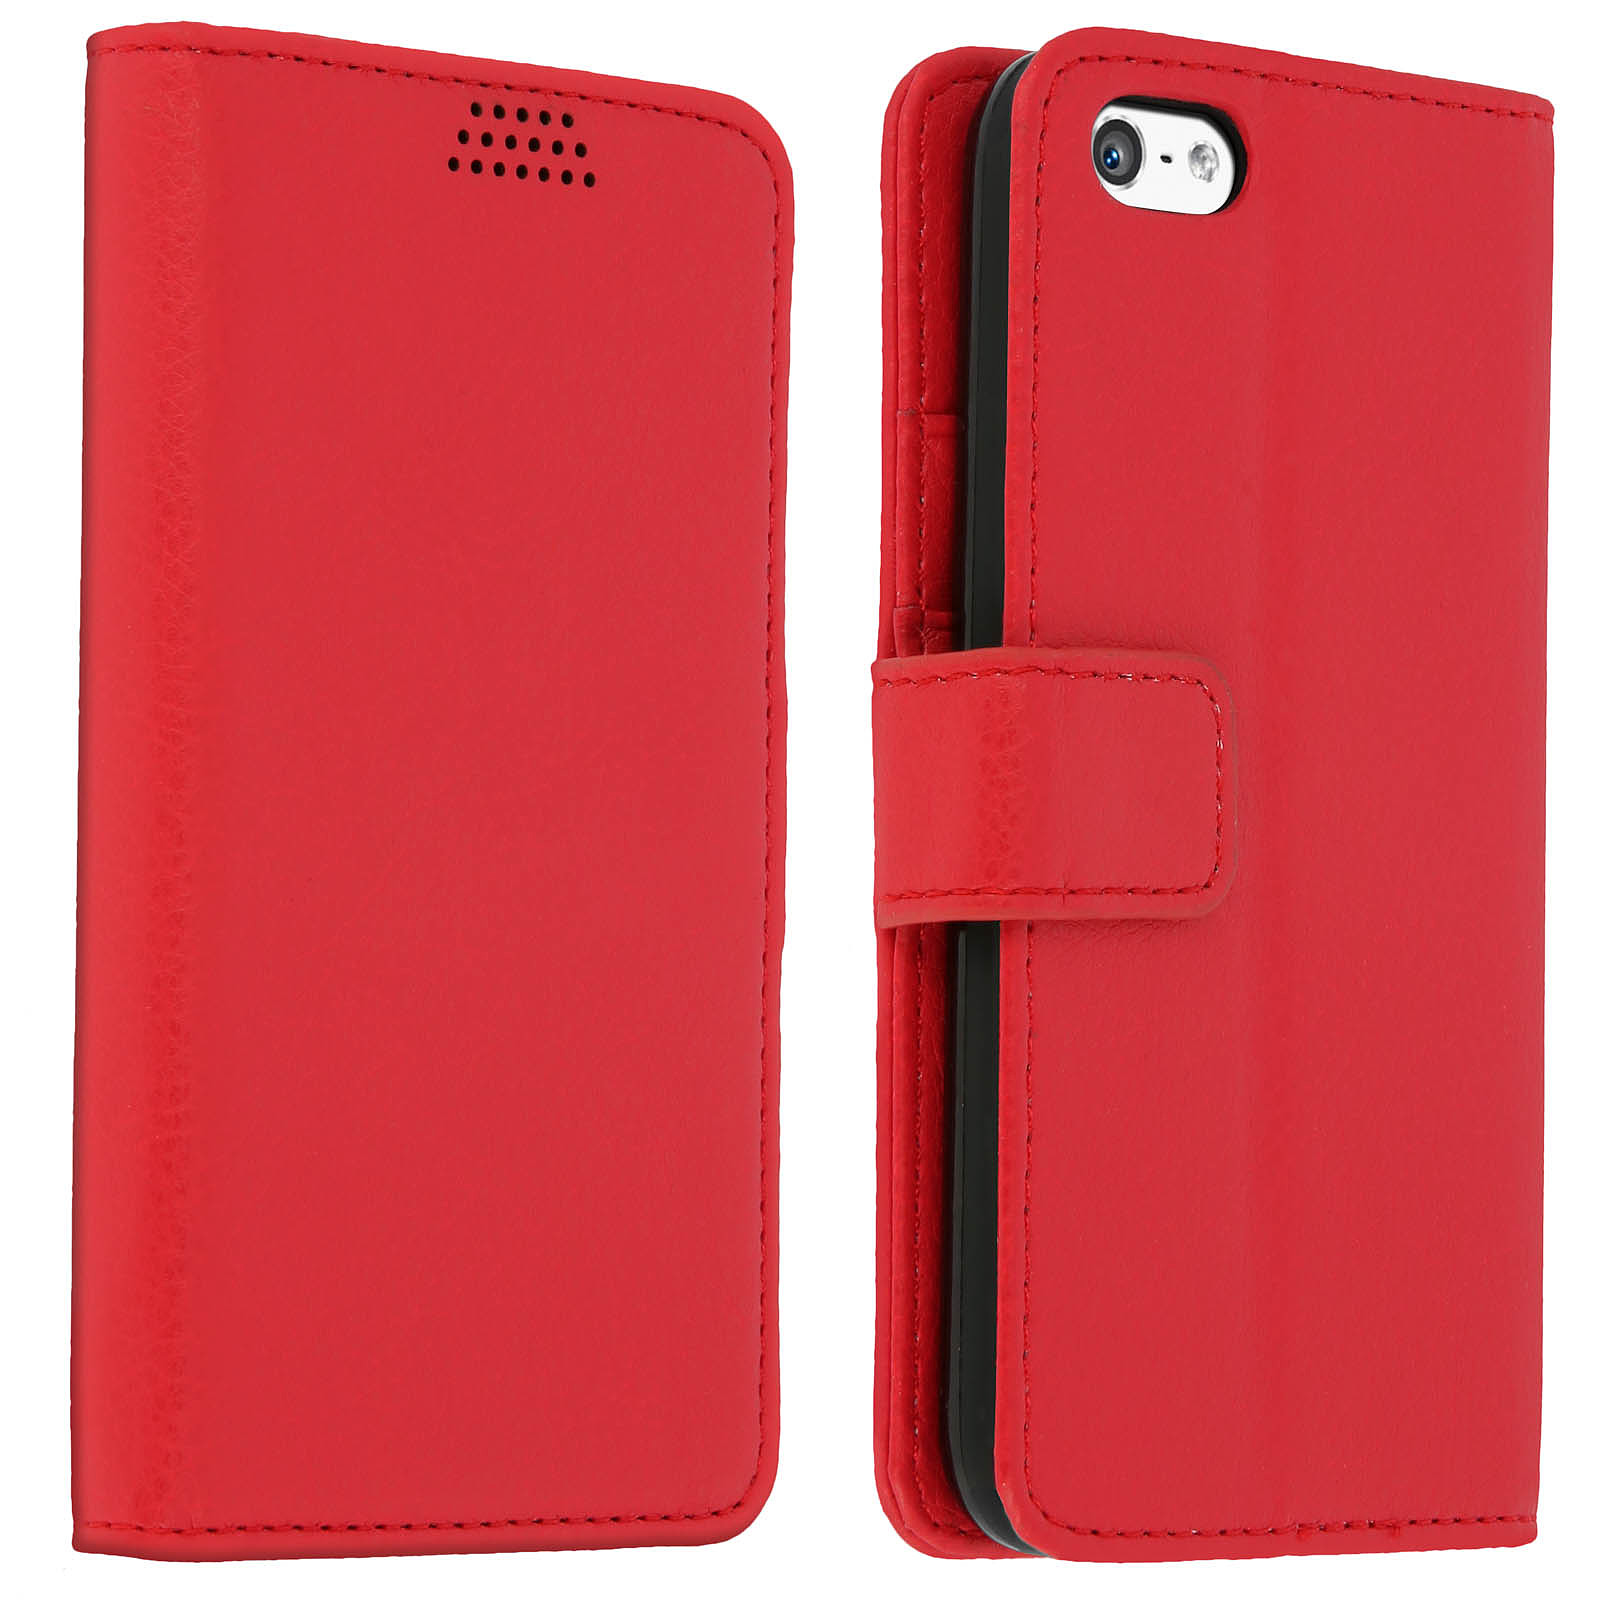 Avizar atui iPhone 5 / 5S / SE Housse Clapet Porte-carte Fonction stand - Rouge - Coque telephone Avizar